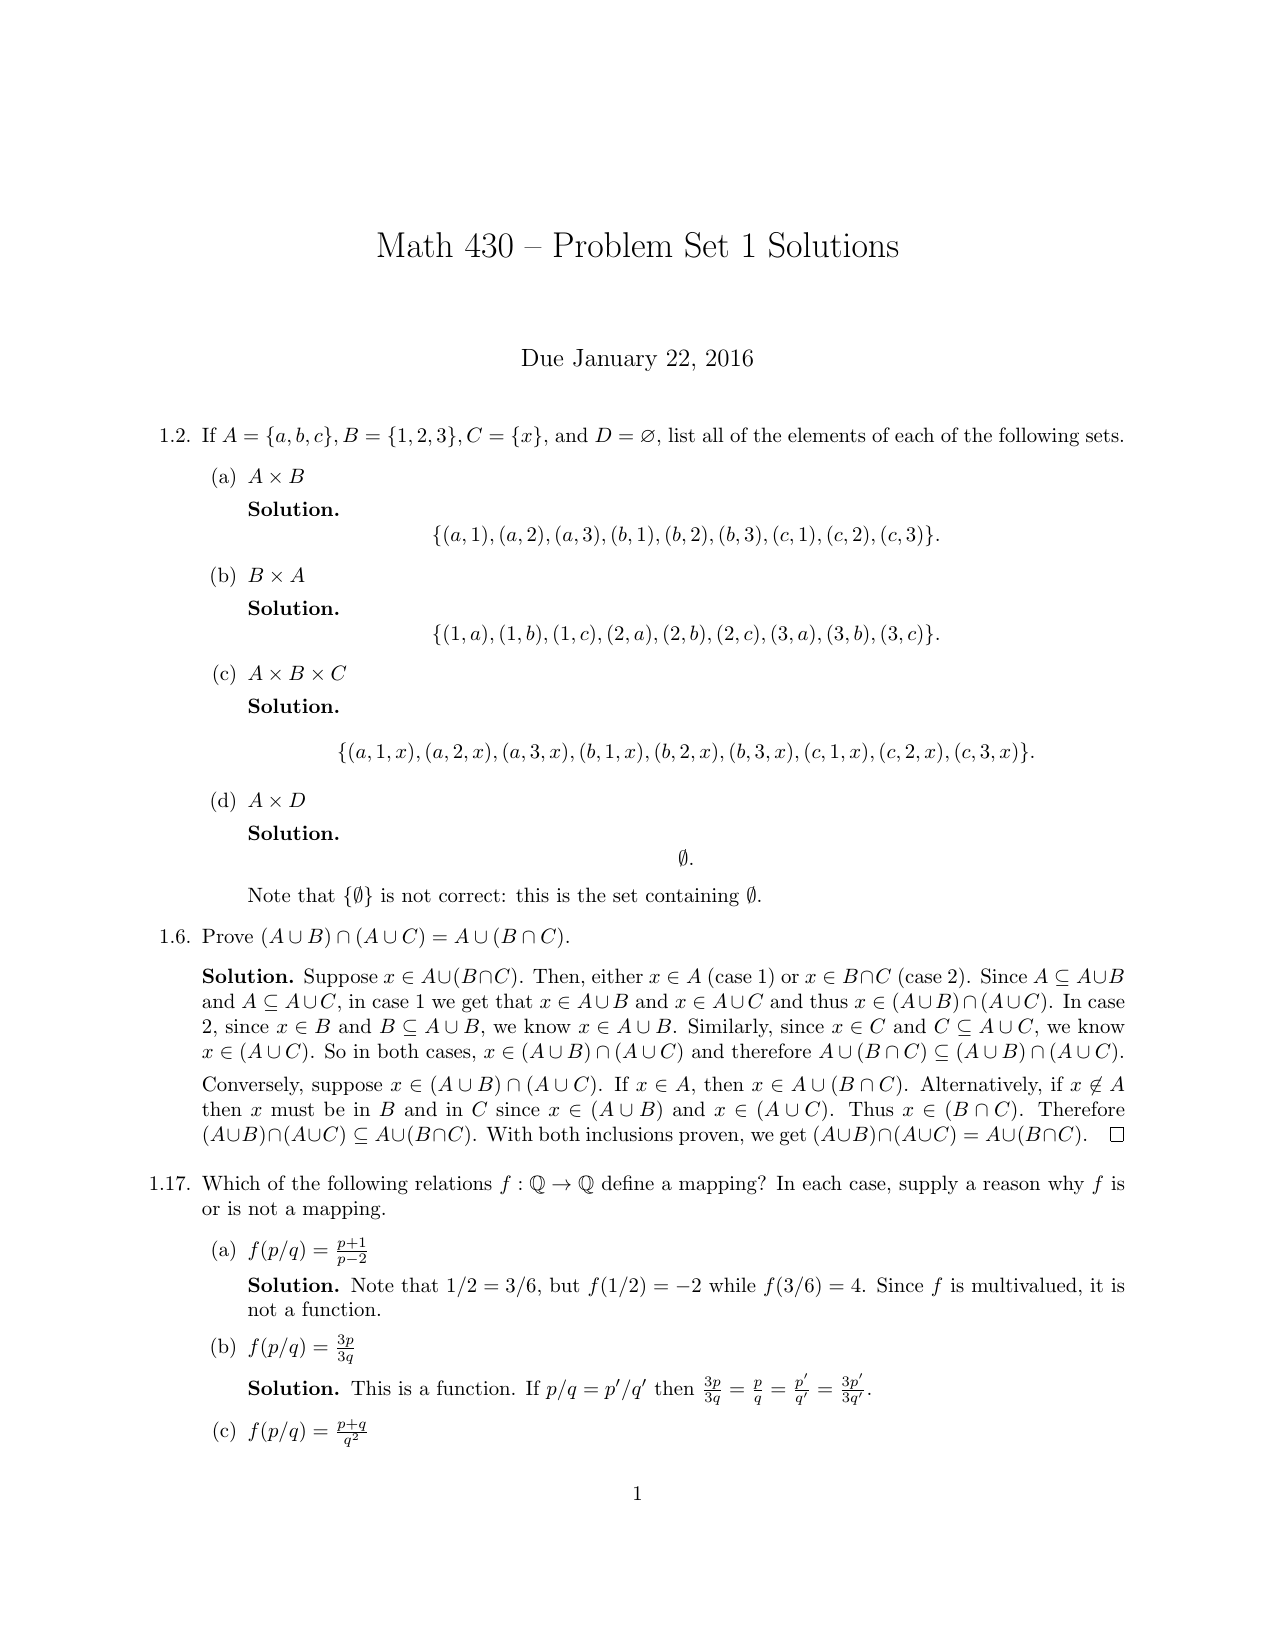 Math 430 Problem Set 1 Solutions